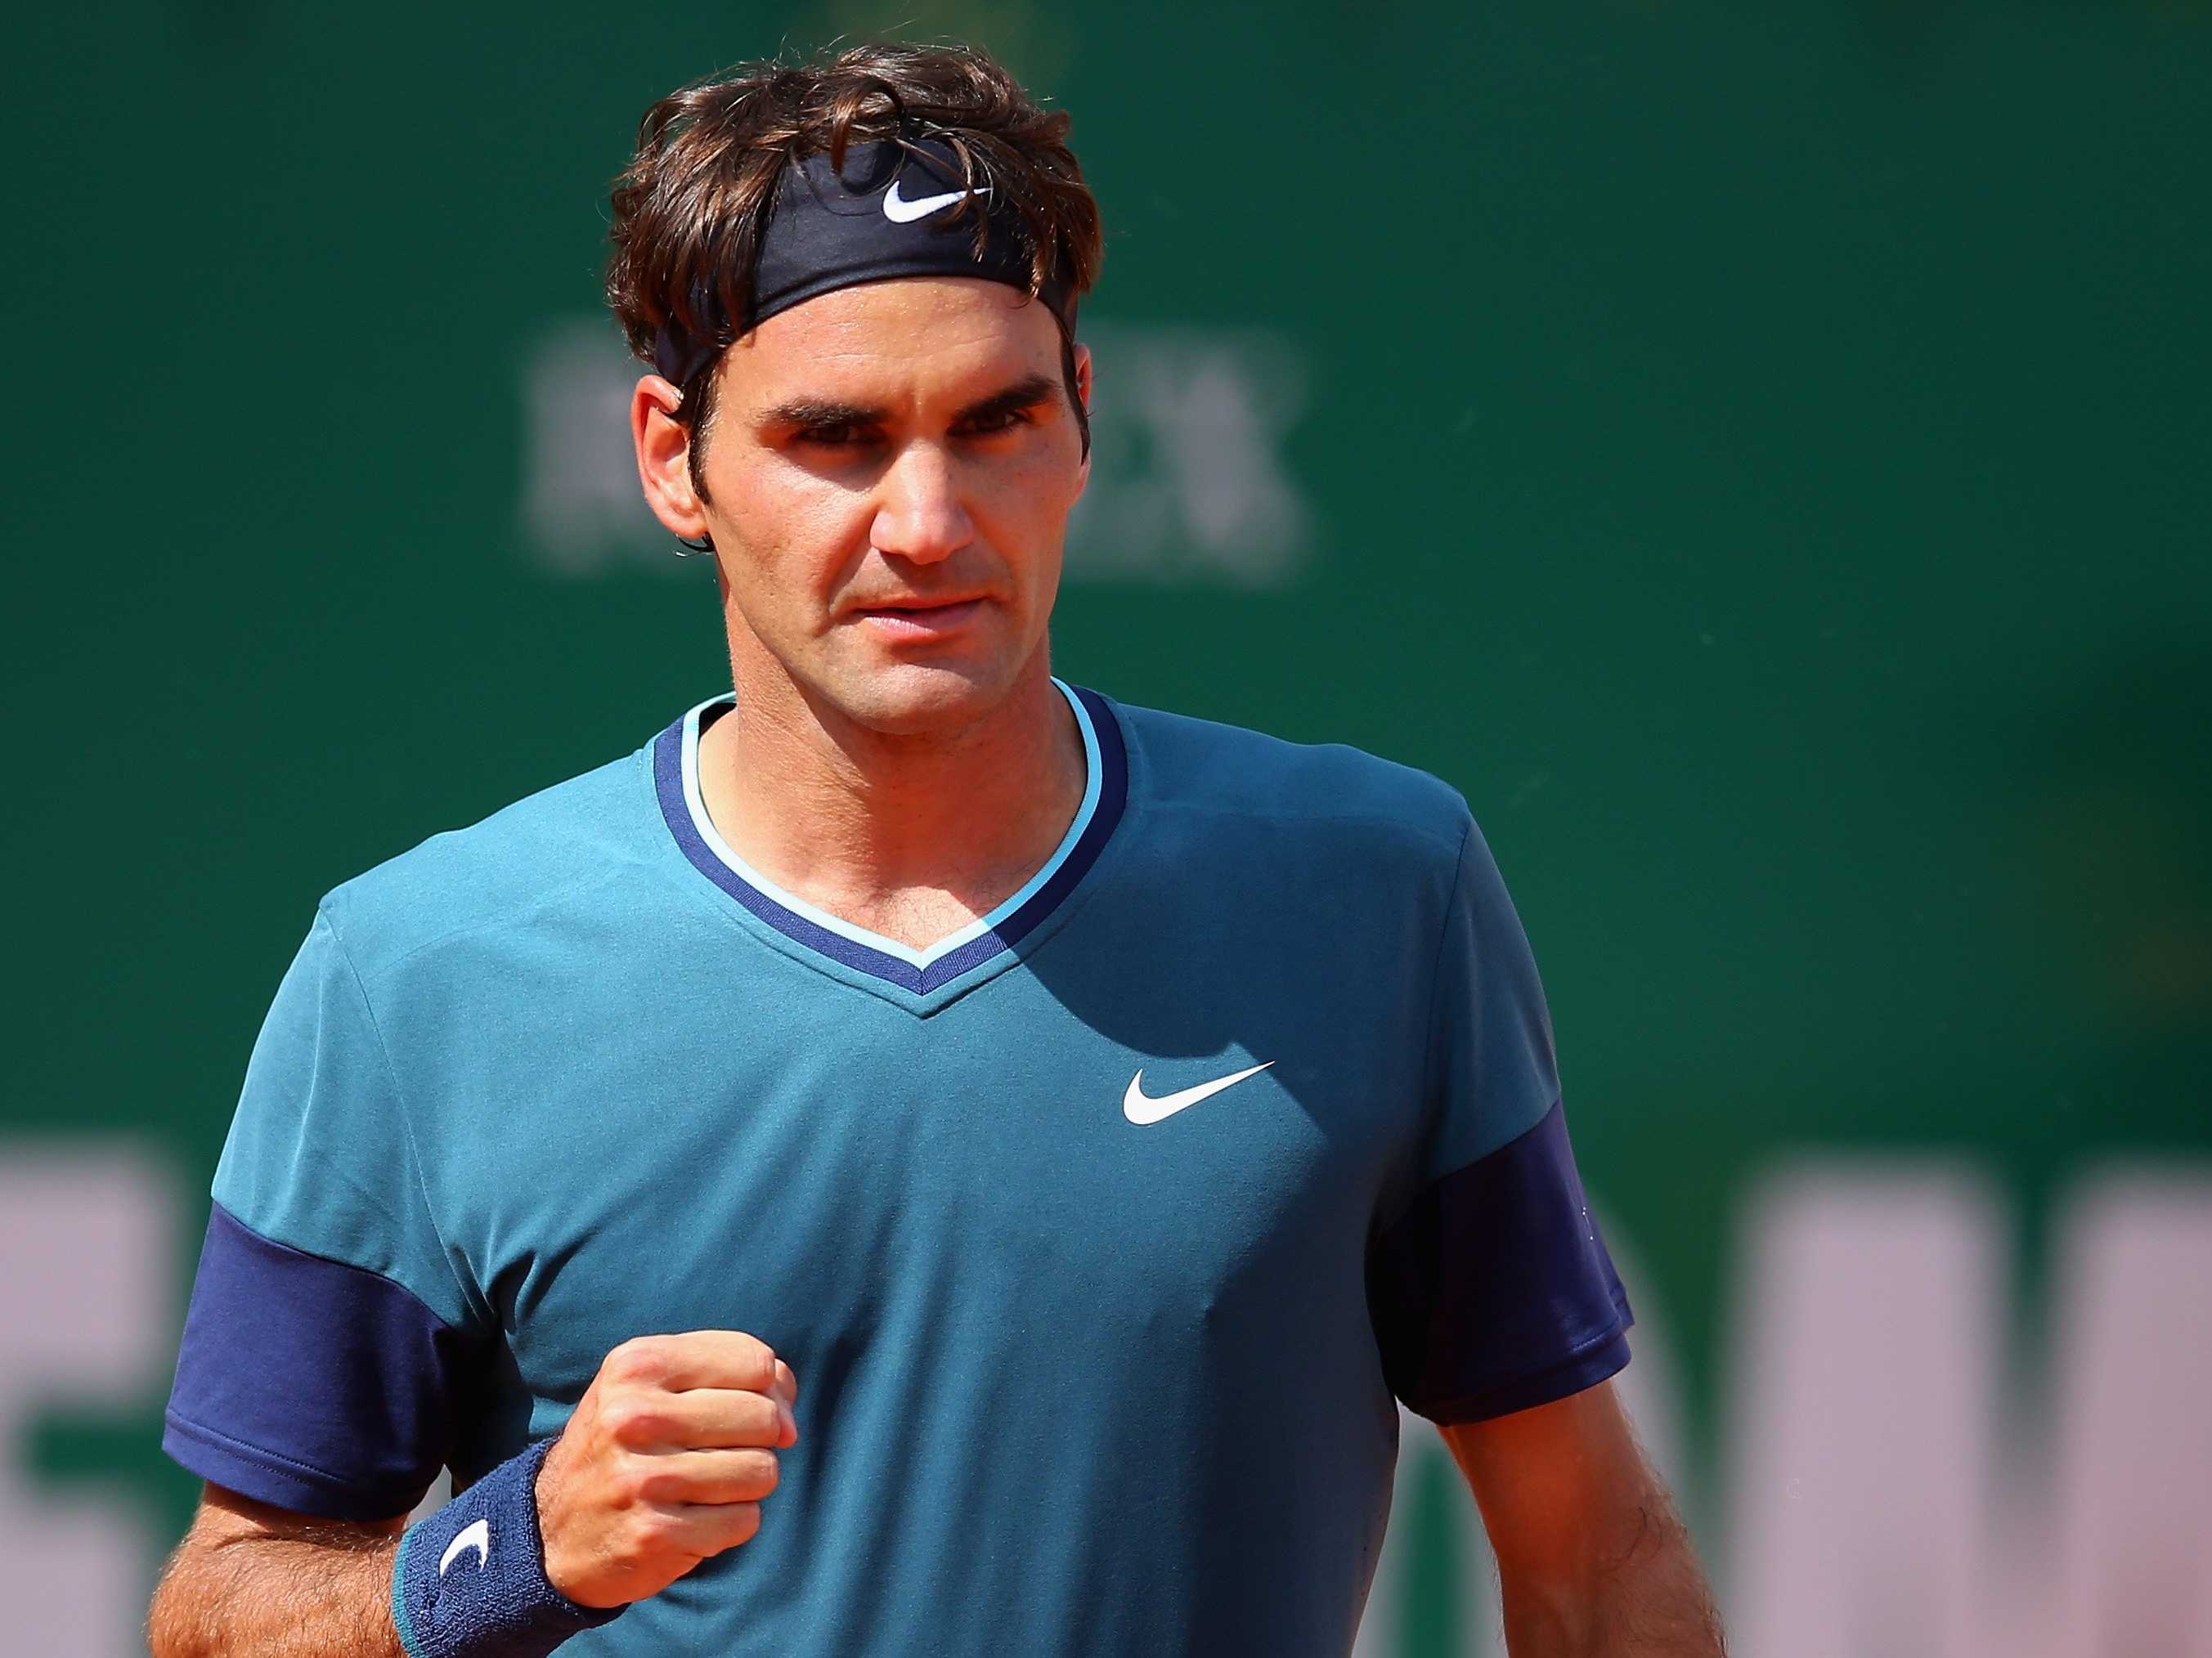 Cool Picture Of Roger Federer